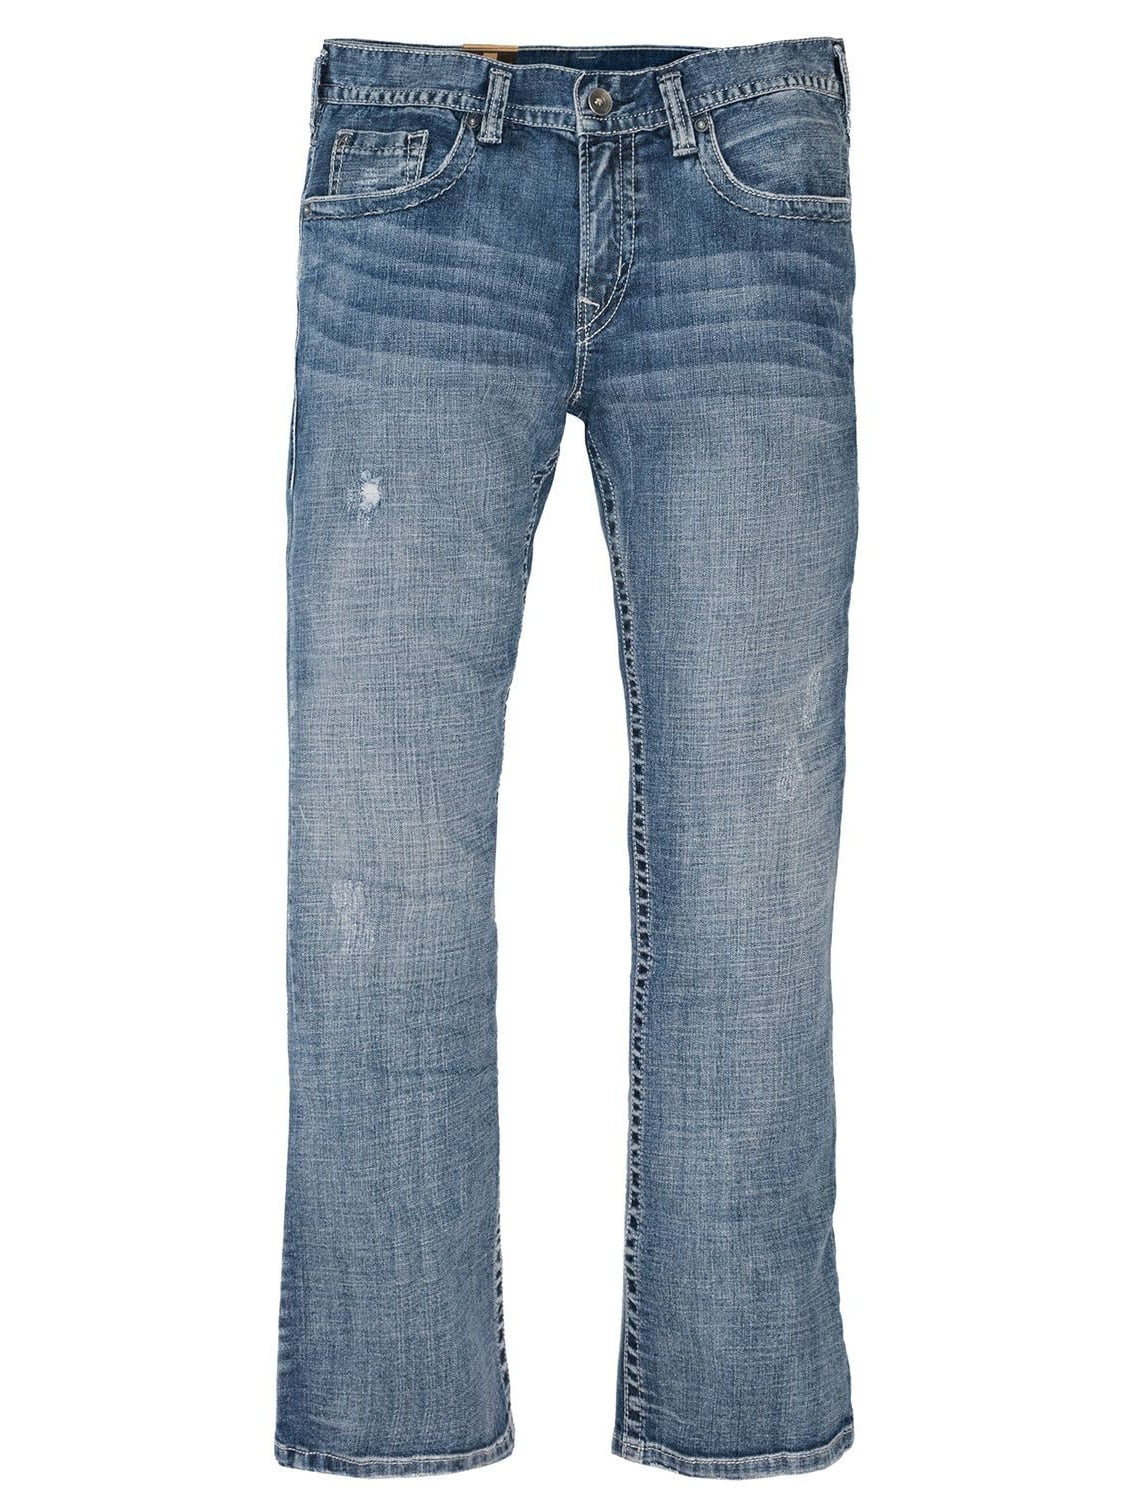 T.K. AXEL MFG Co. Mens Jeans Vintage 